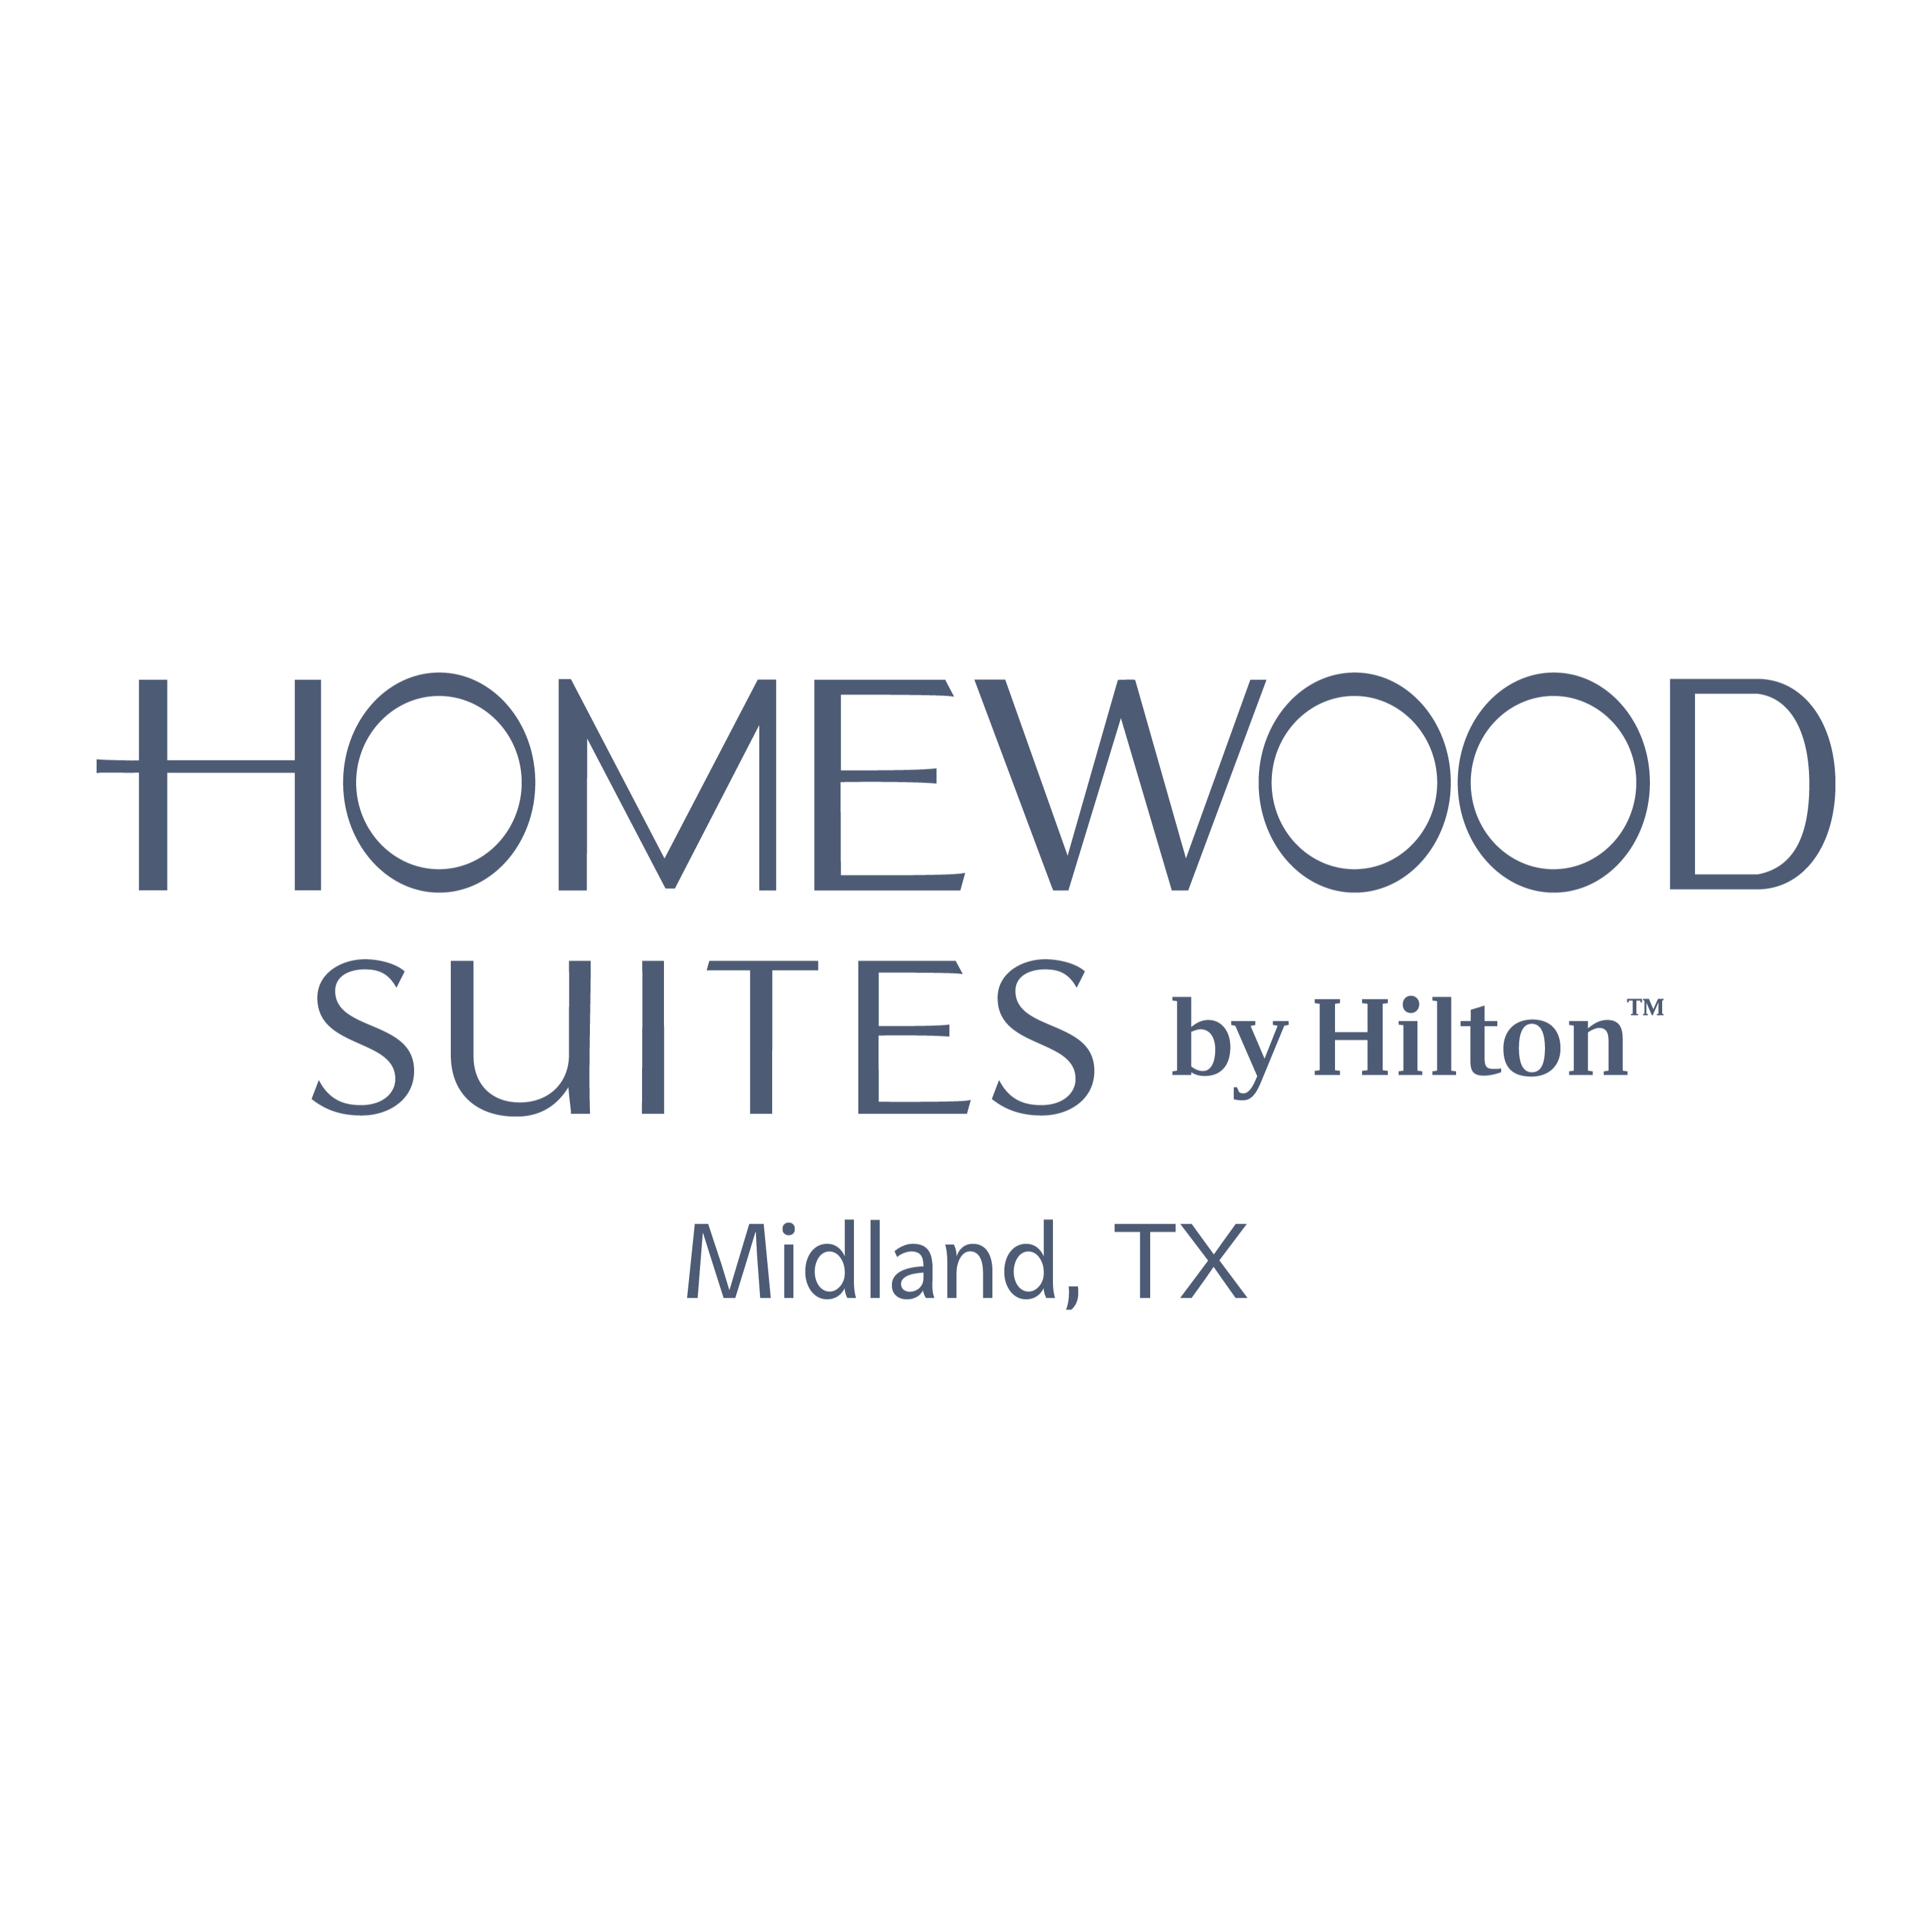 Homewood Suites by Hilton Midland, TX